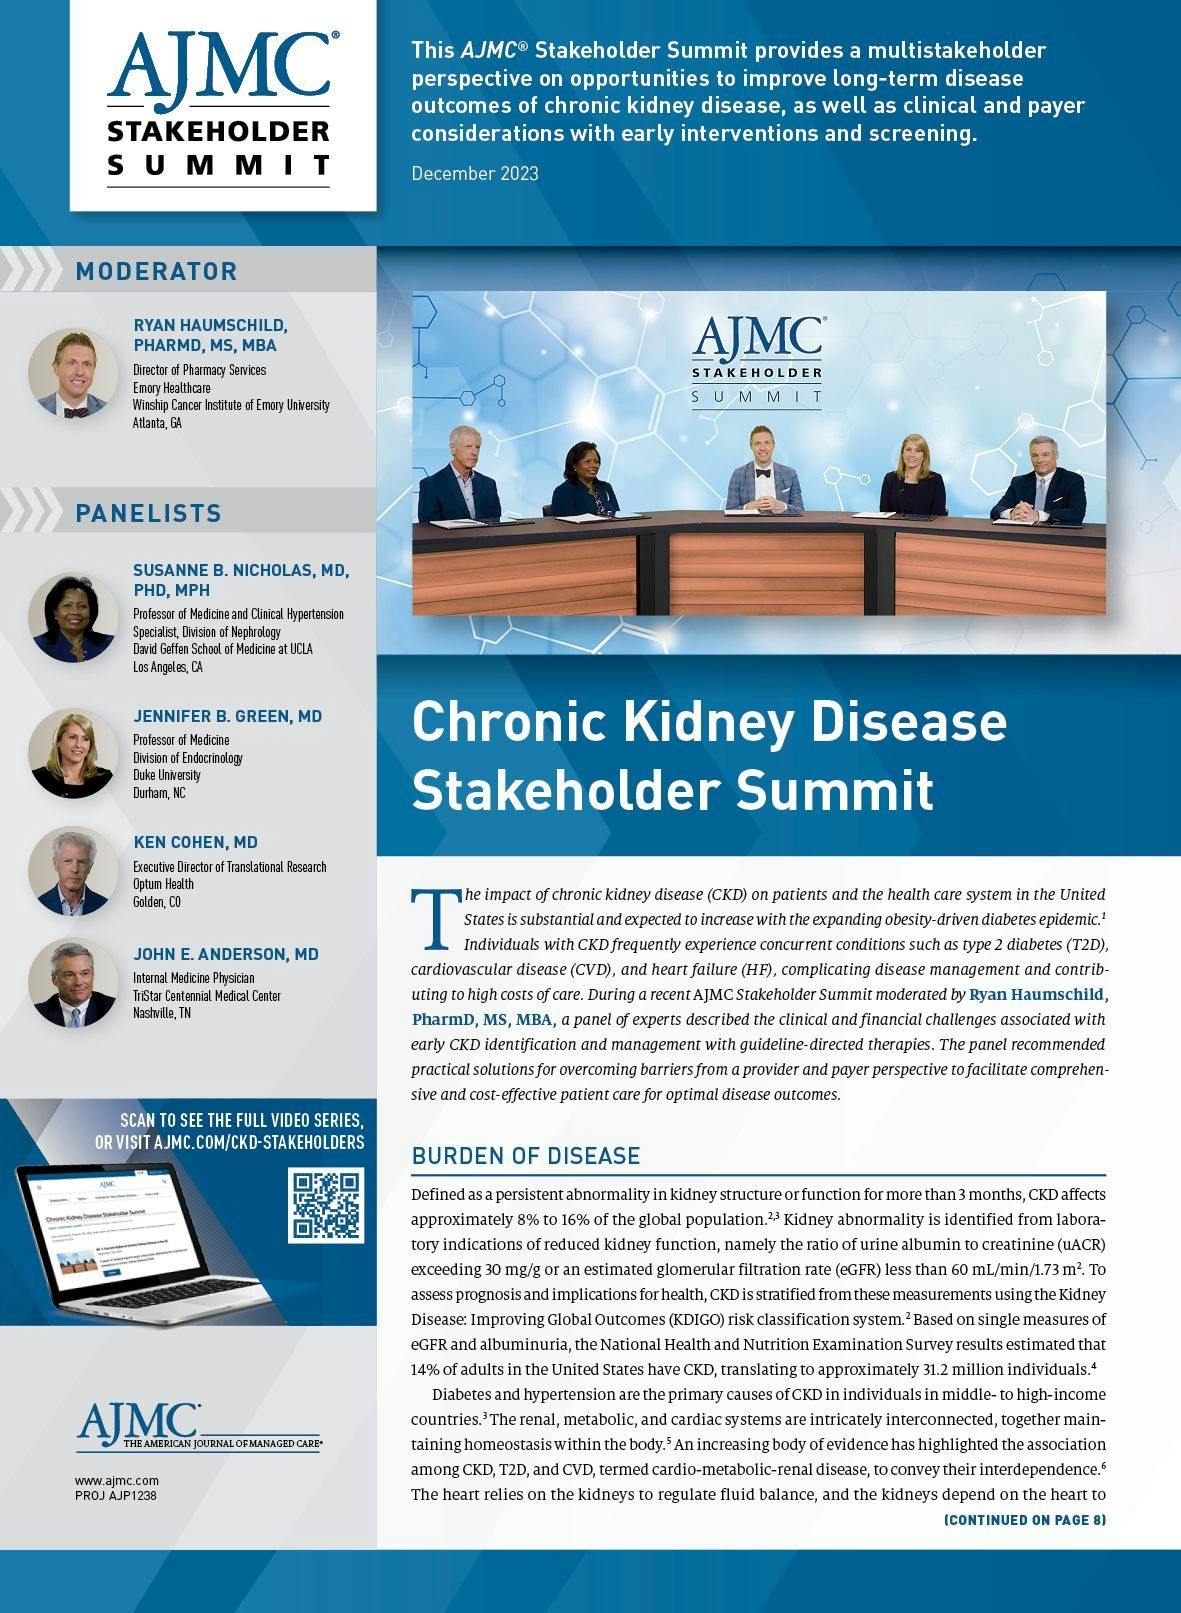 Chronic Kidney Disease Stakeholder Summit